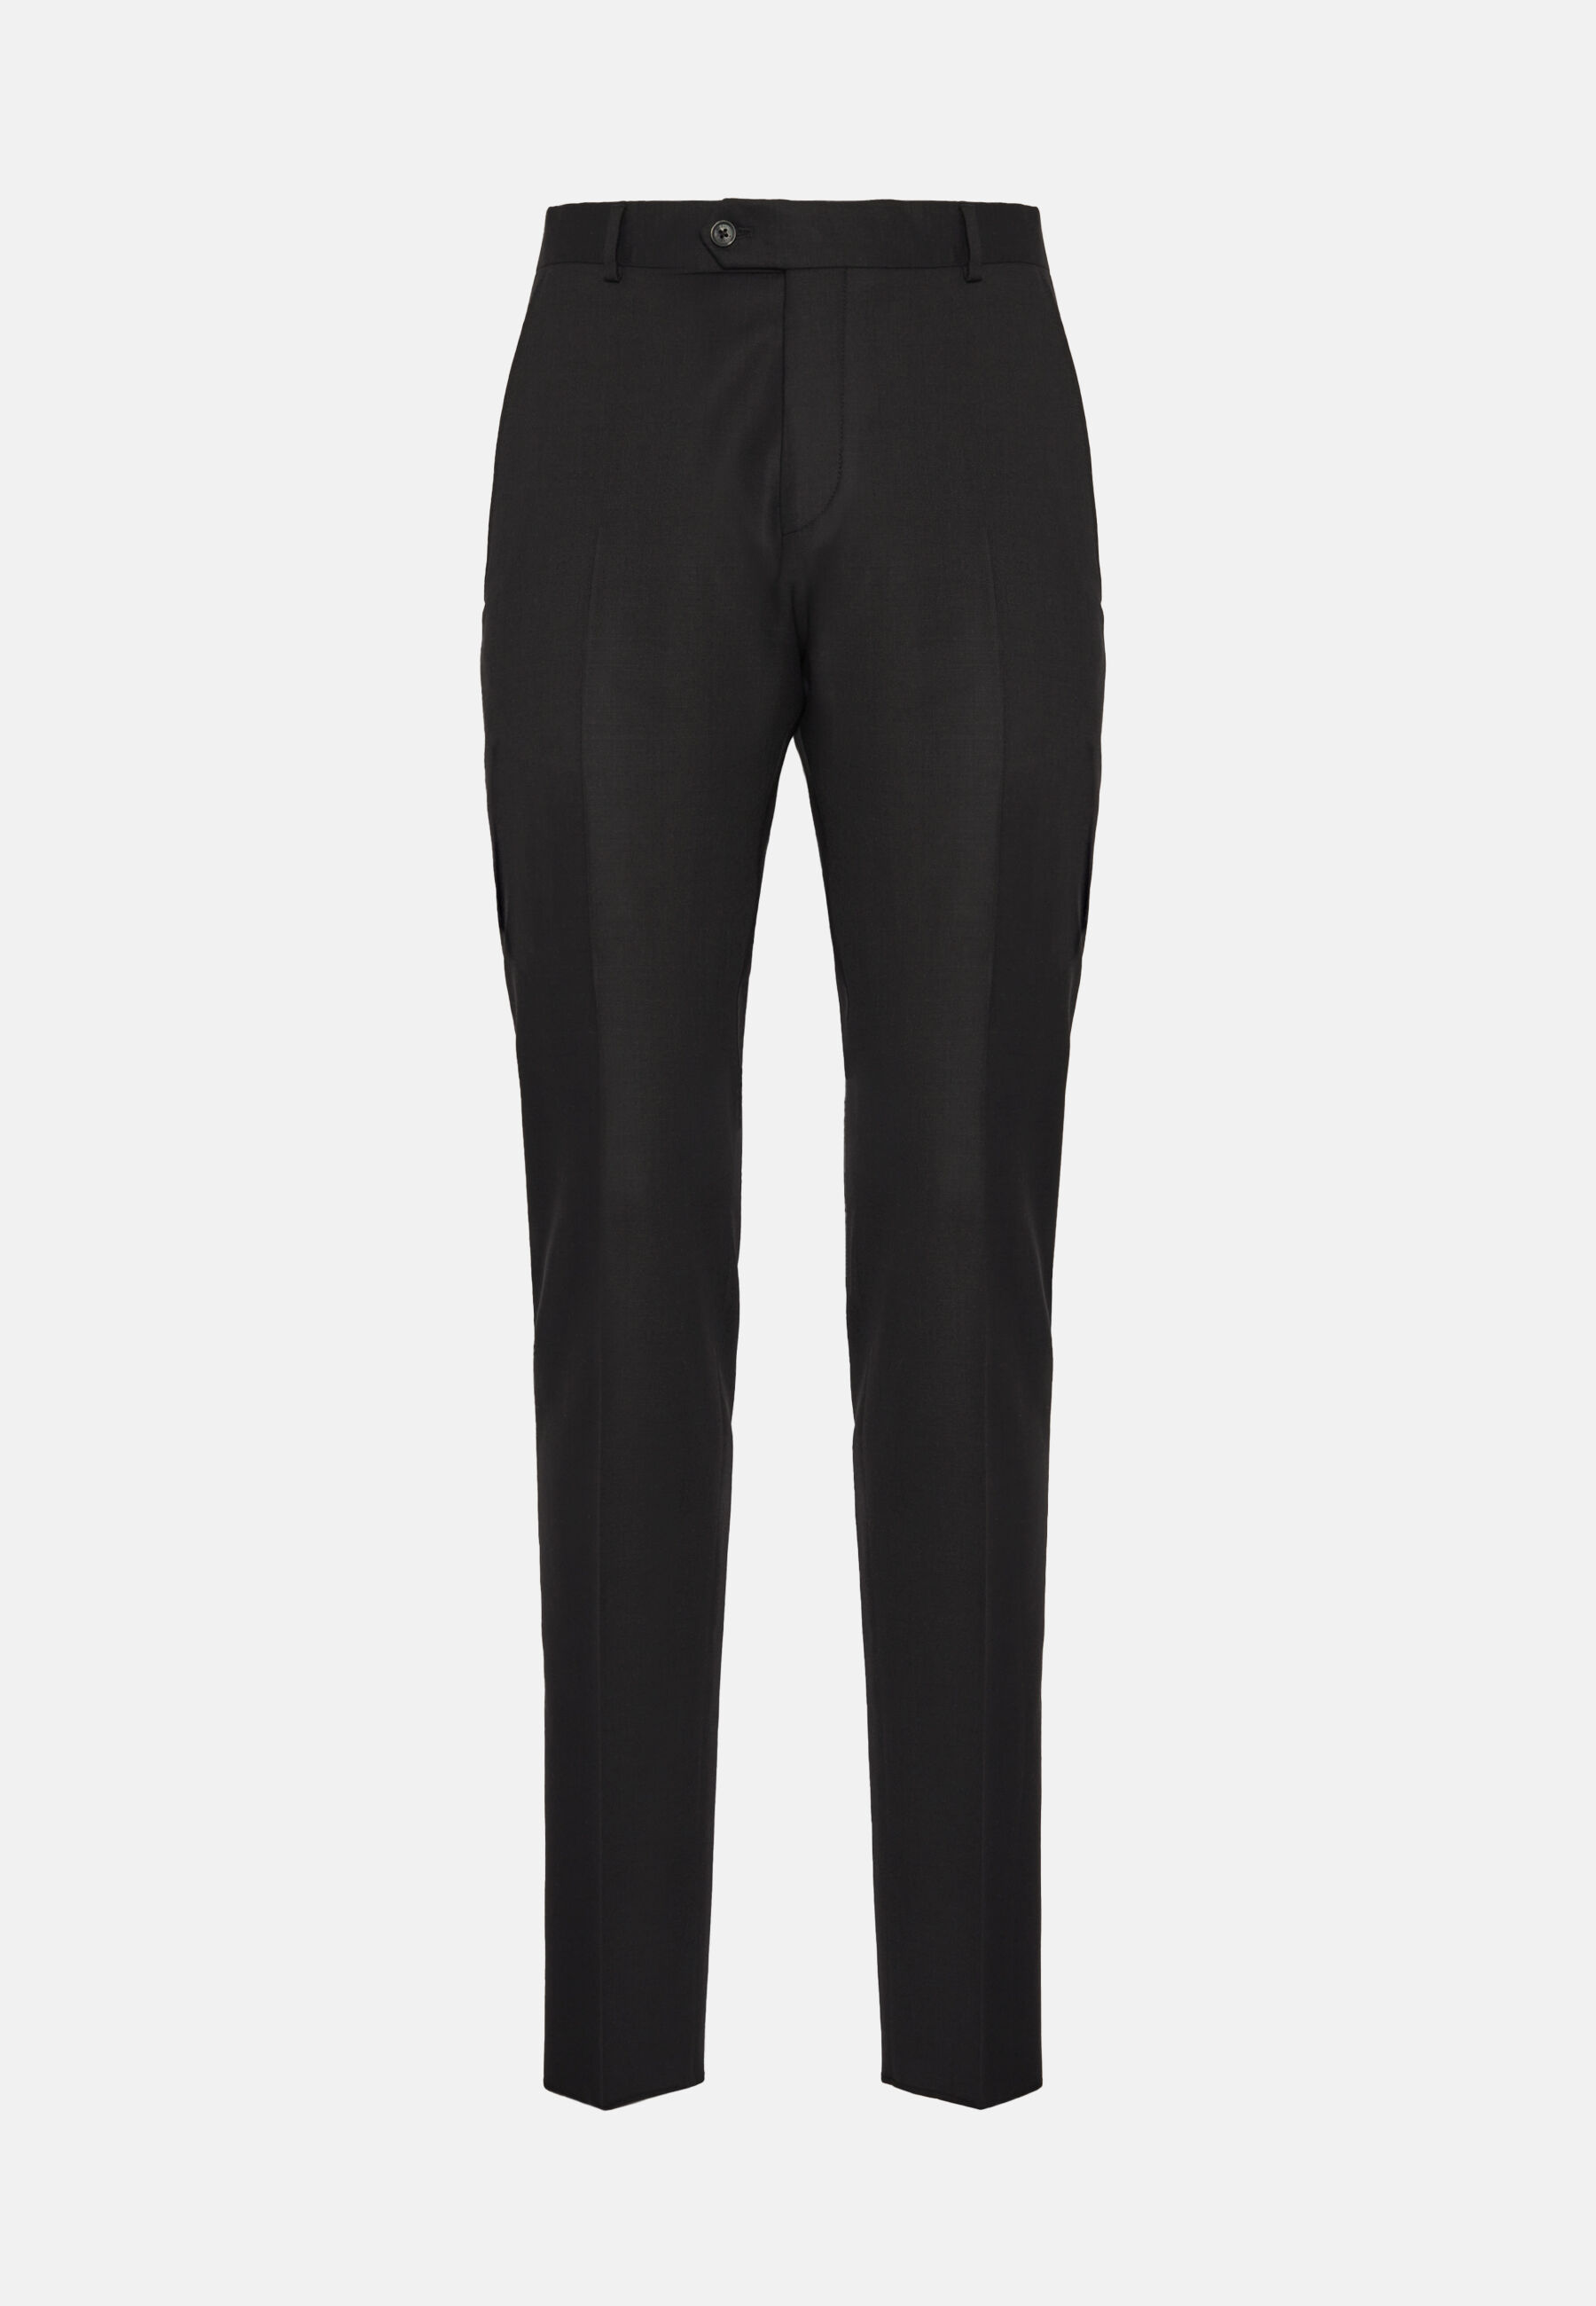 Lineage High Twist Microtech Men's 2 Button Suit Black 38R Blazer 30x32.5  Pants | eBay